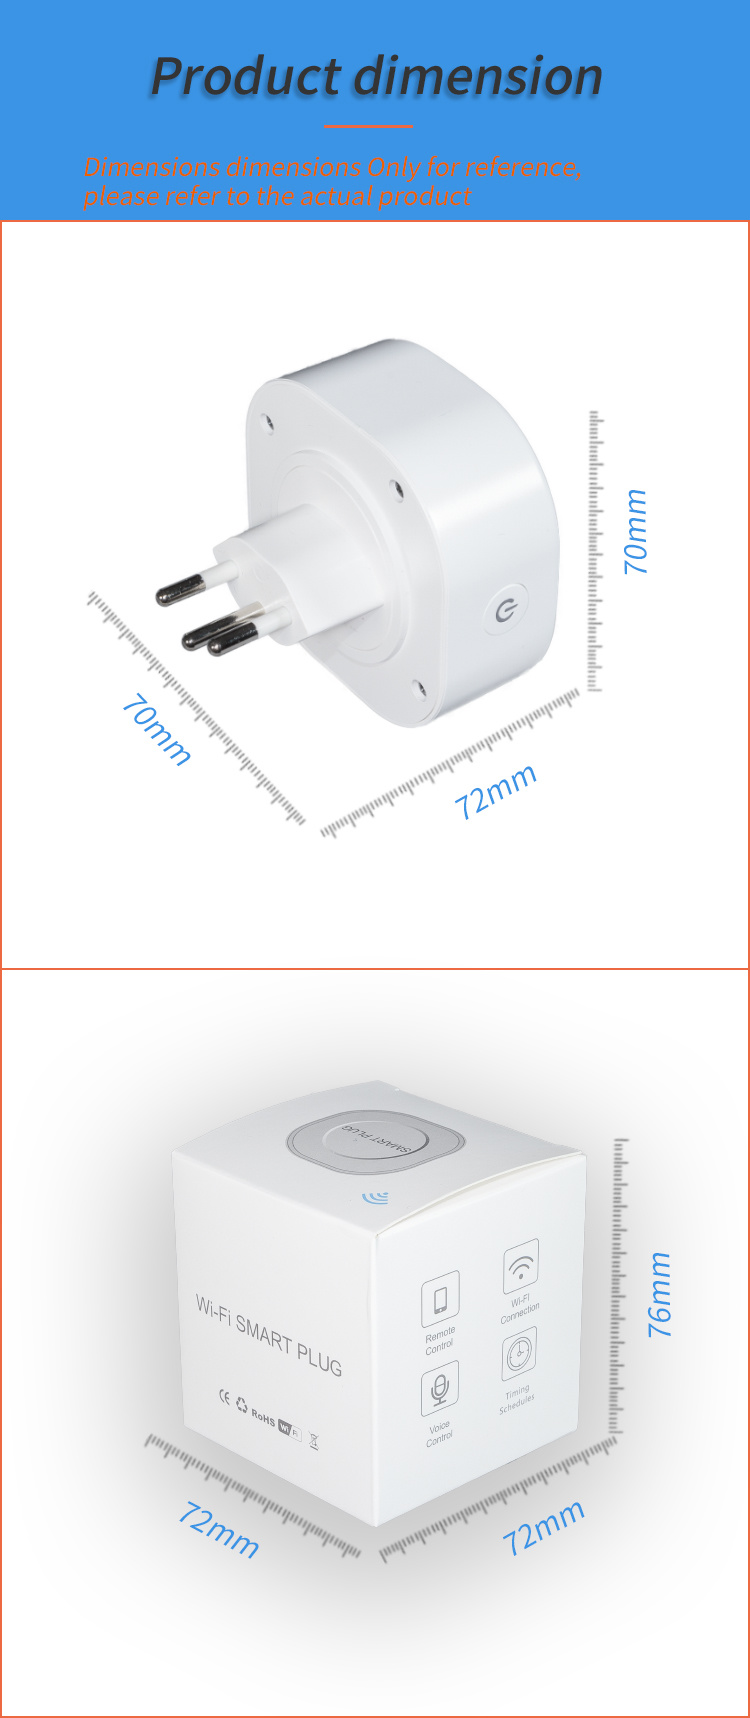 Smart Home Smart WiFi Plug Socket WiFi Smart Plug Socket Compatible with Alexa Google Assistant